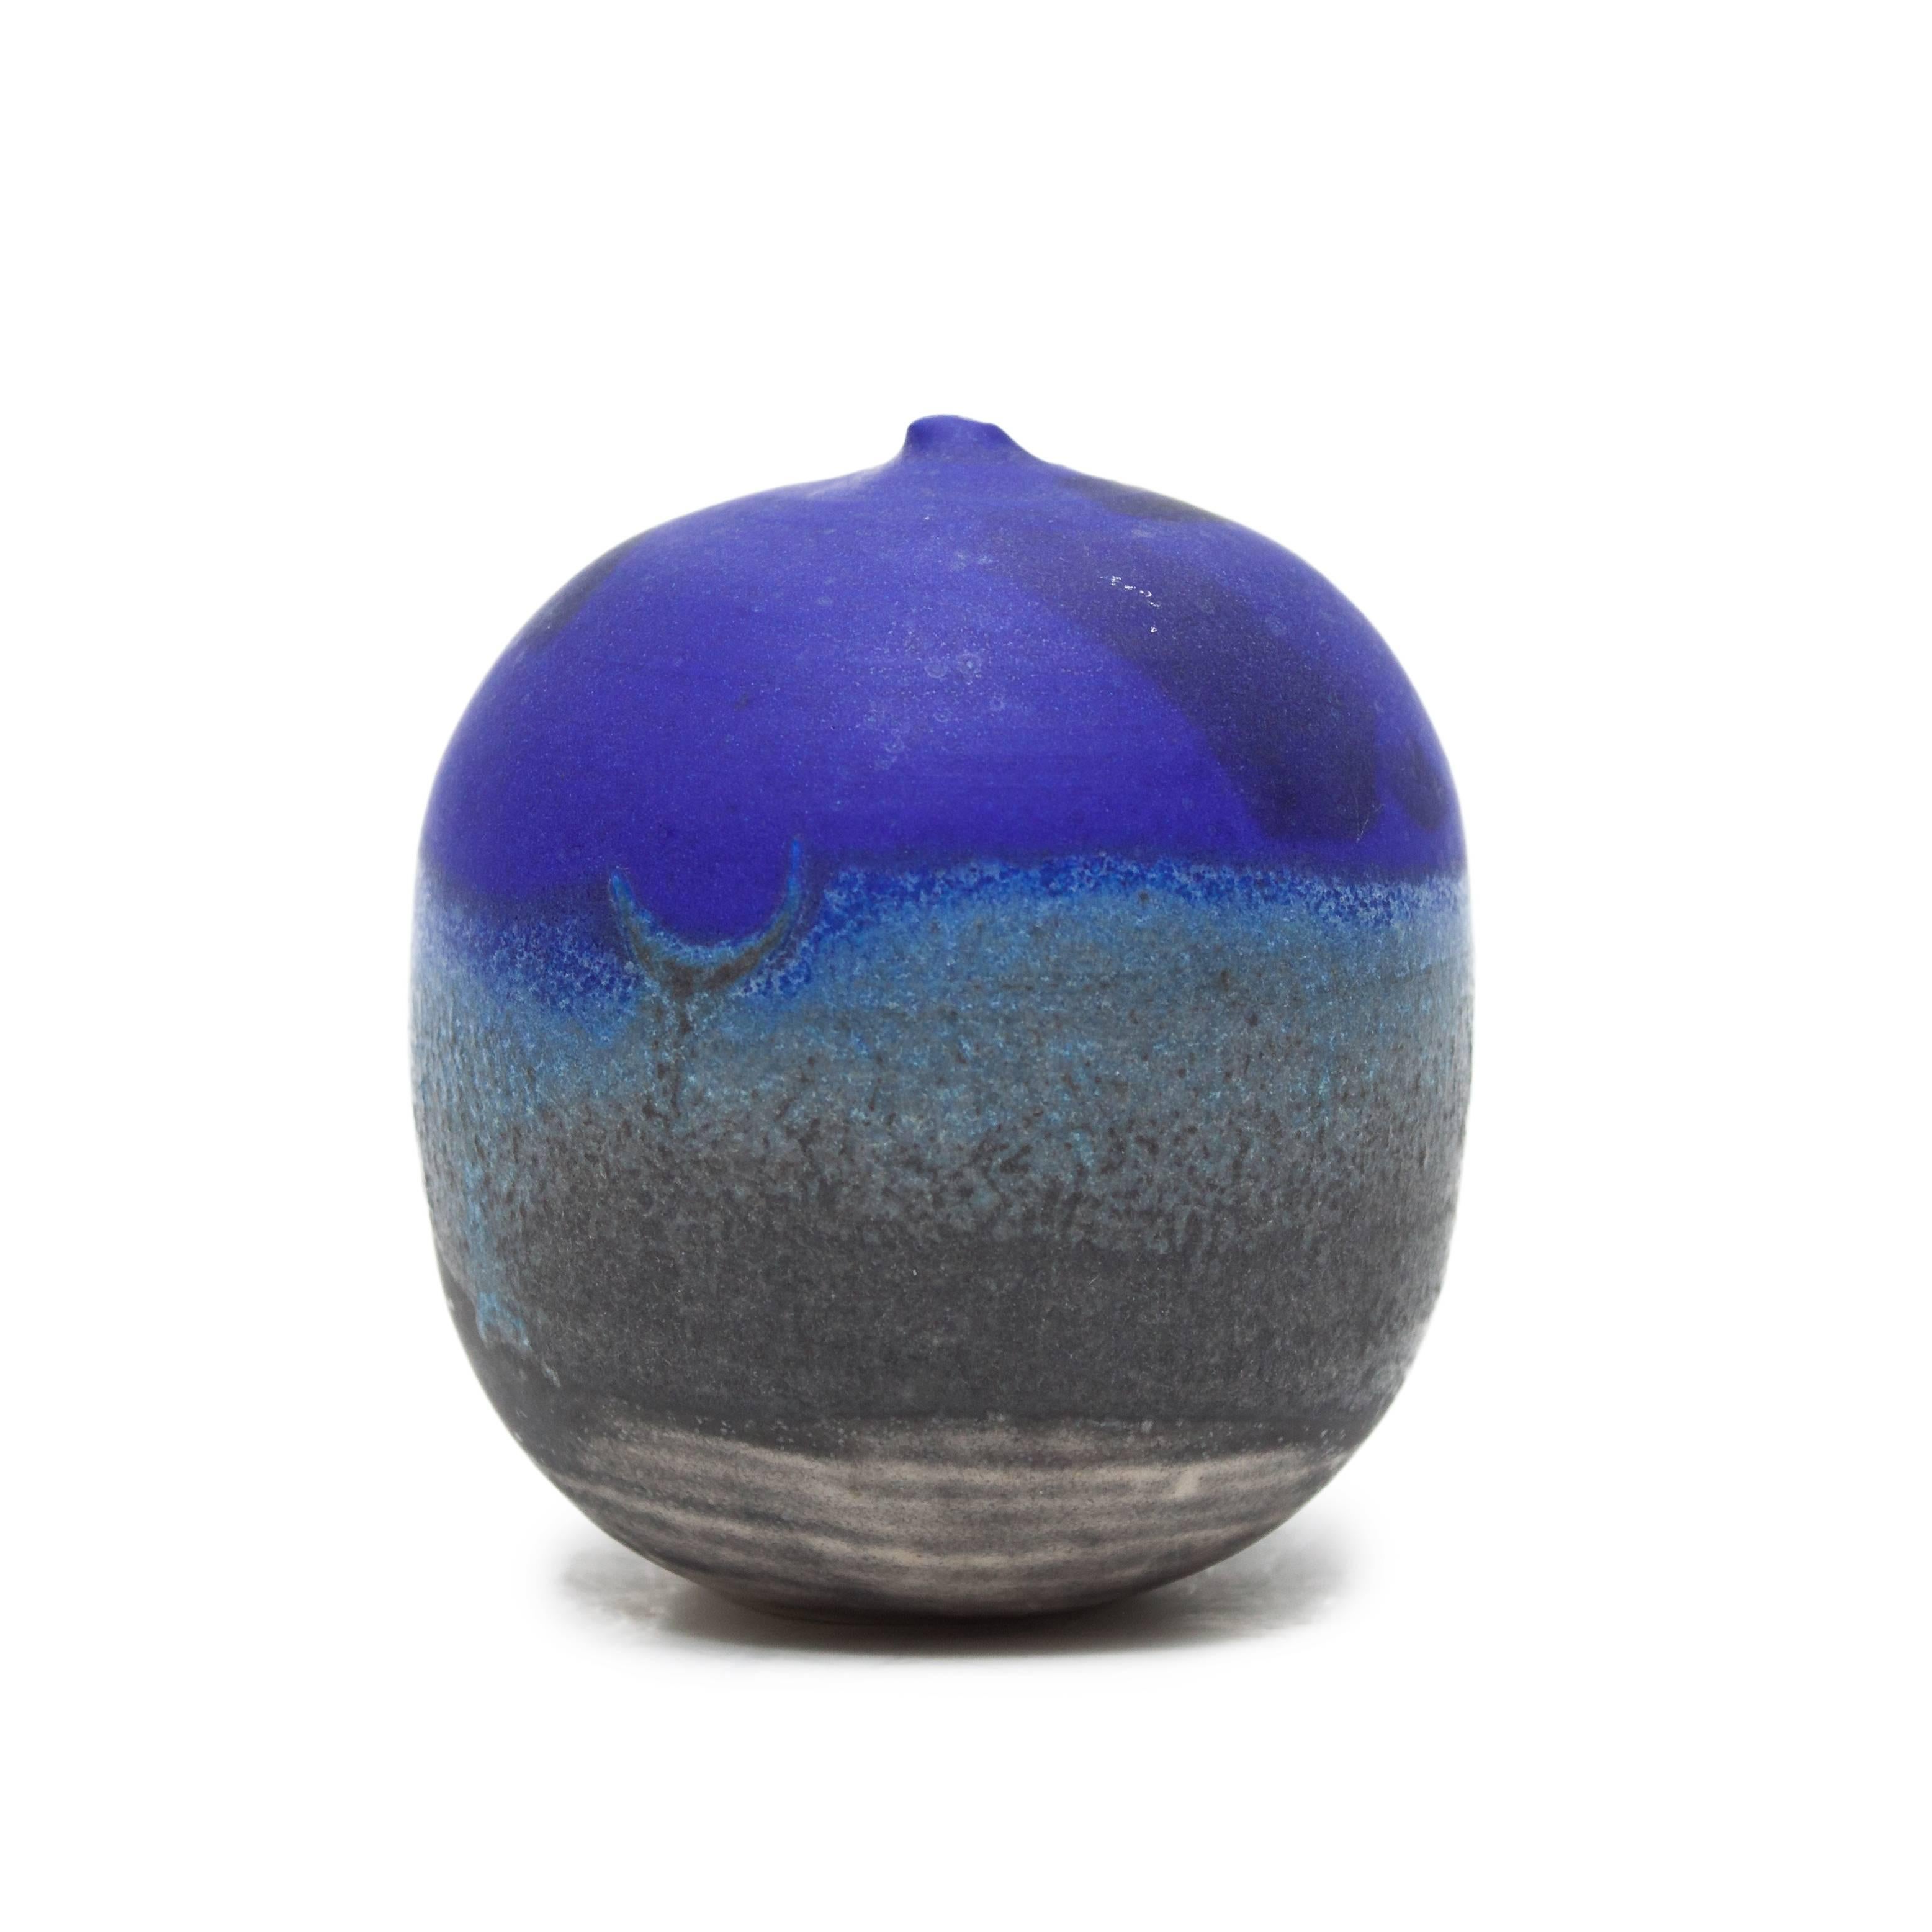 Cobalt Blue Moon Pot with Rattles - Contemporary Sculpture by Toshiko Takaezu